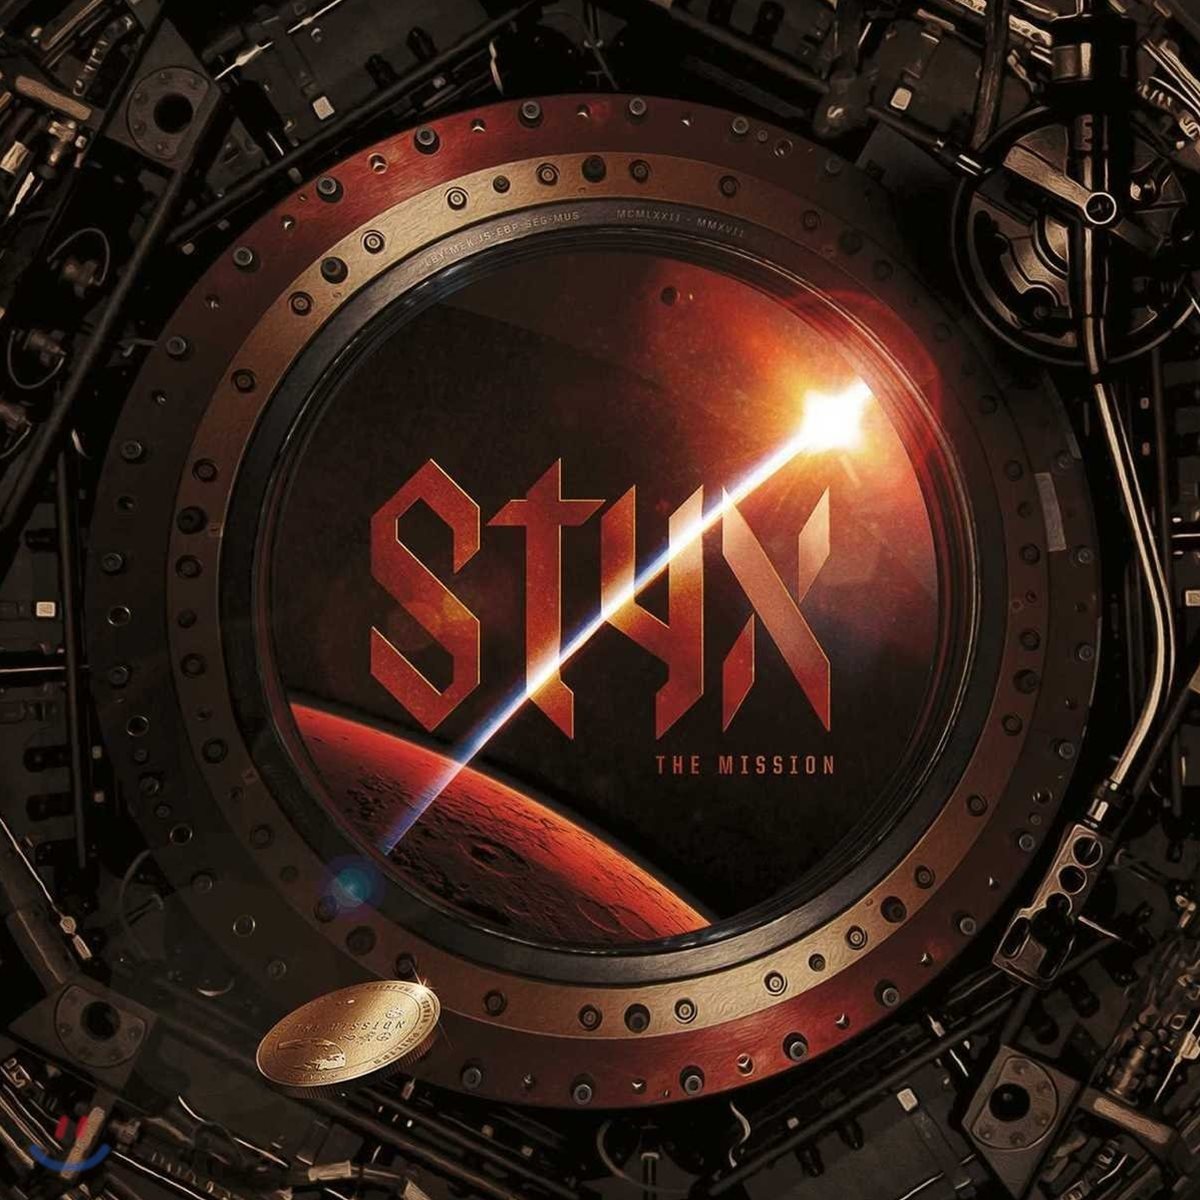 Styx - The Mission 스틱스 16번째 정규 앨범